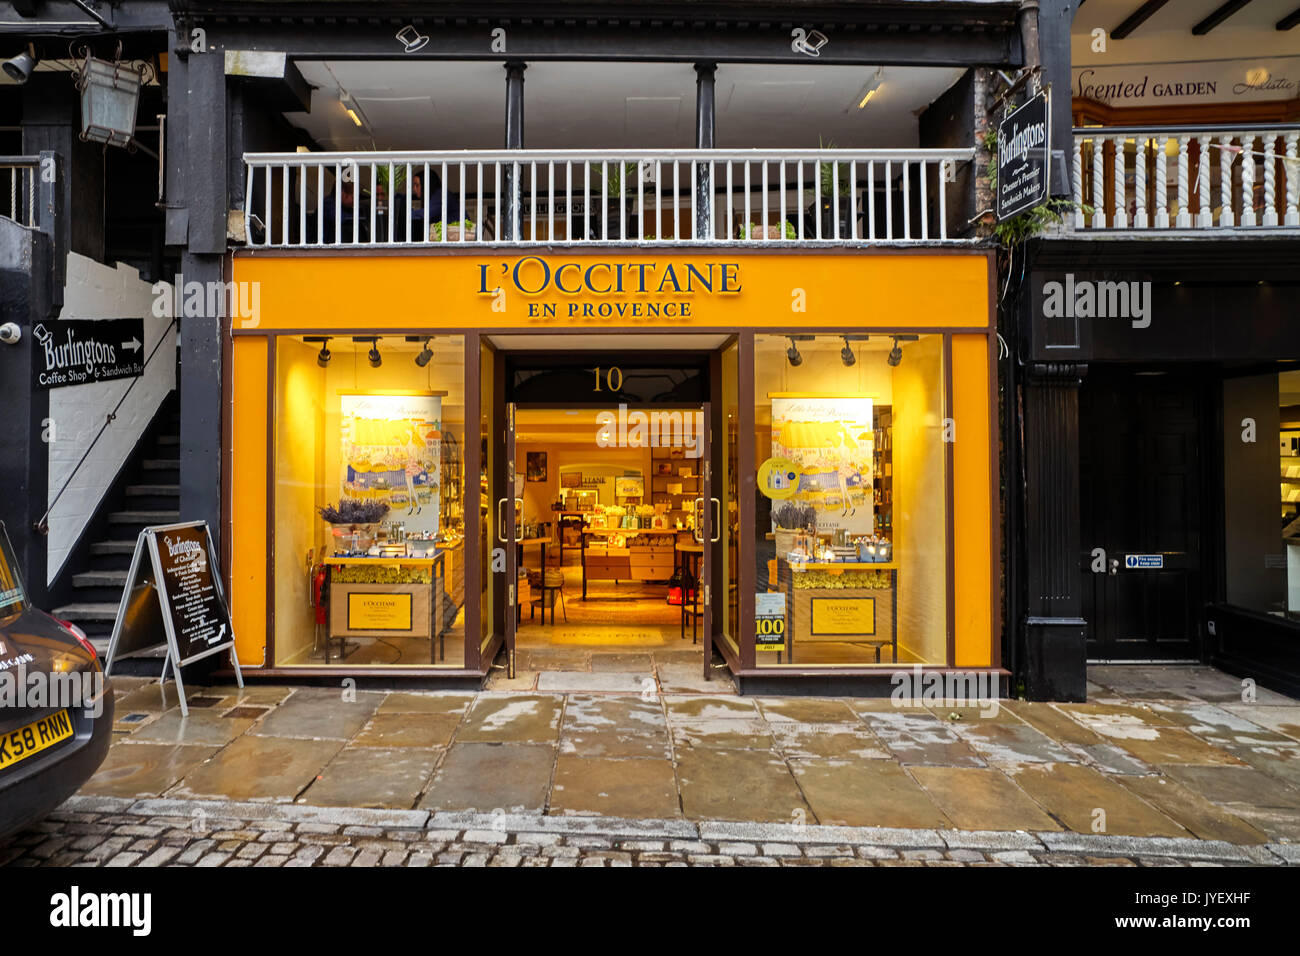 L’Occitane en provence shop in Chester, UK Stock Photo